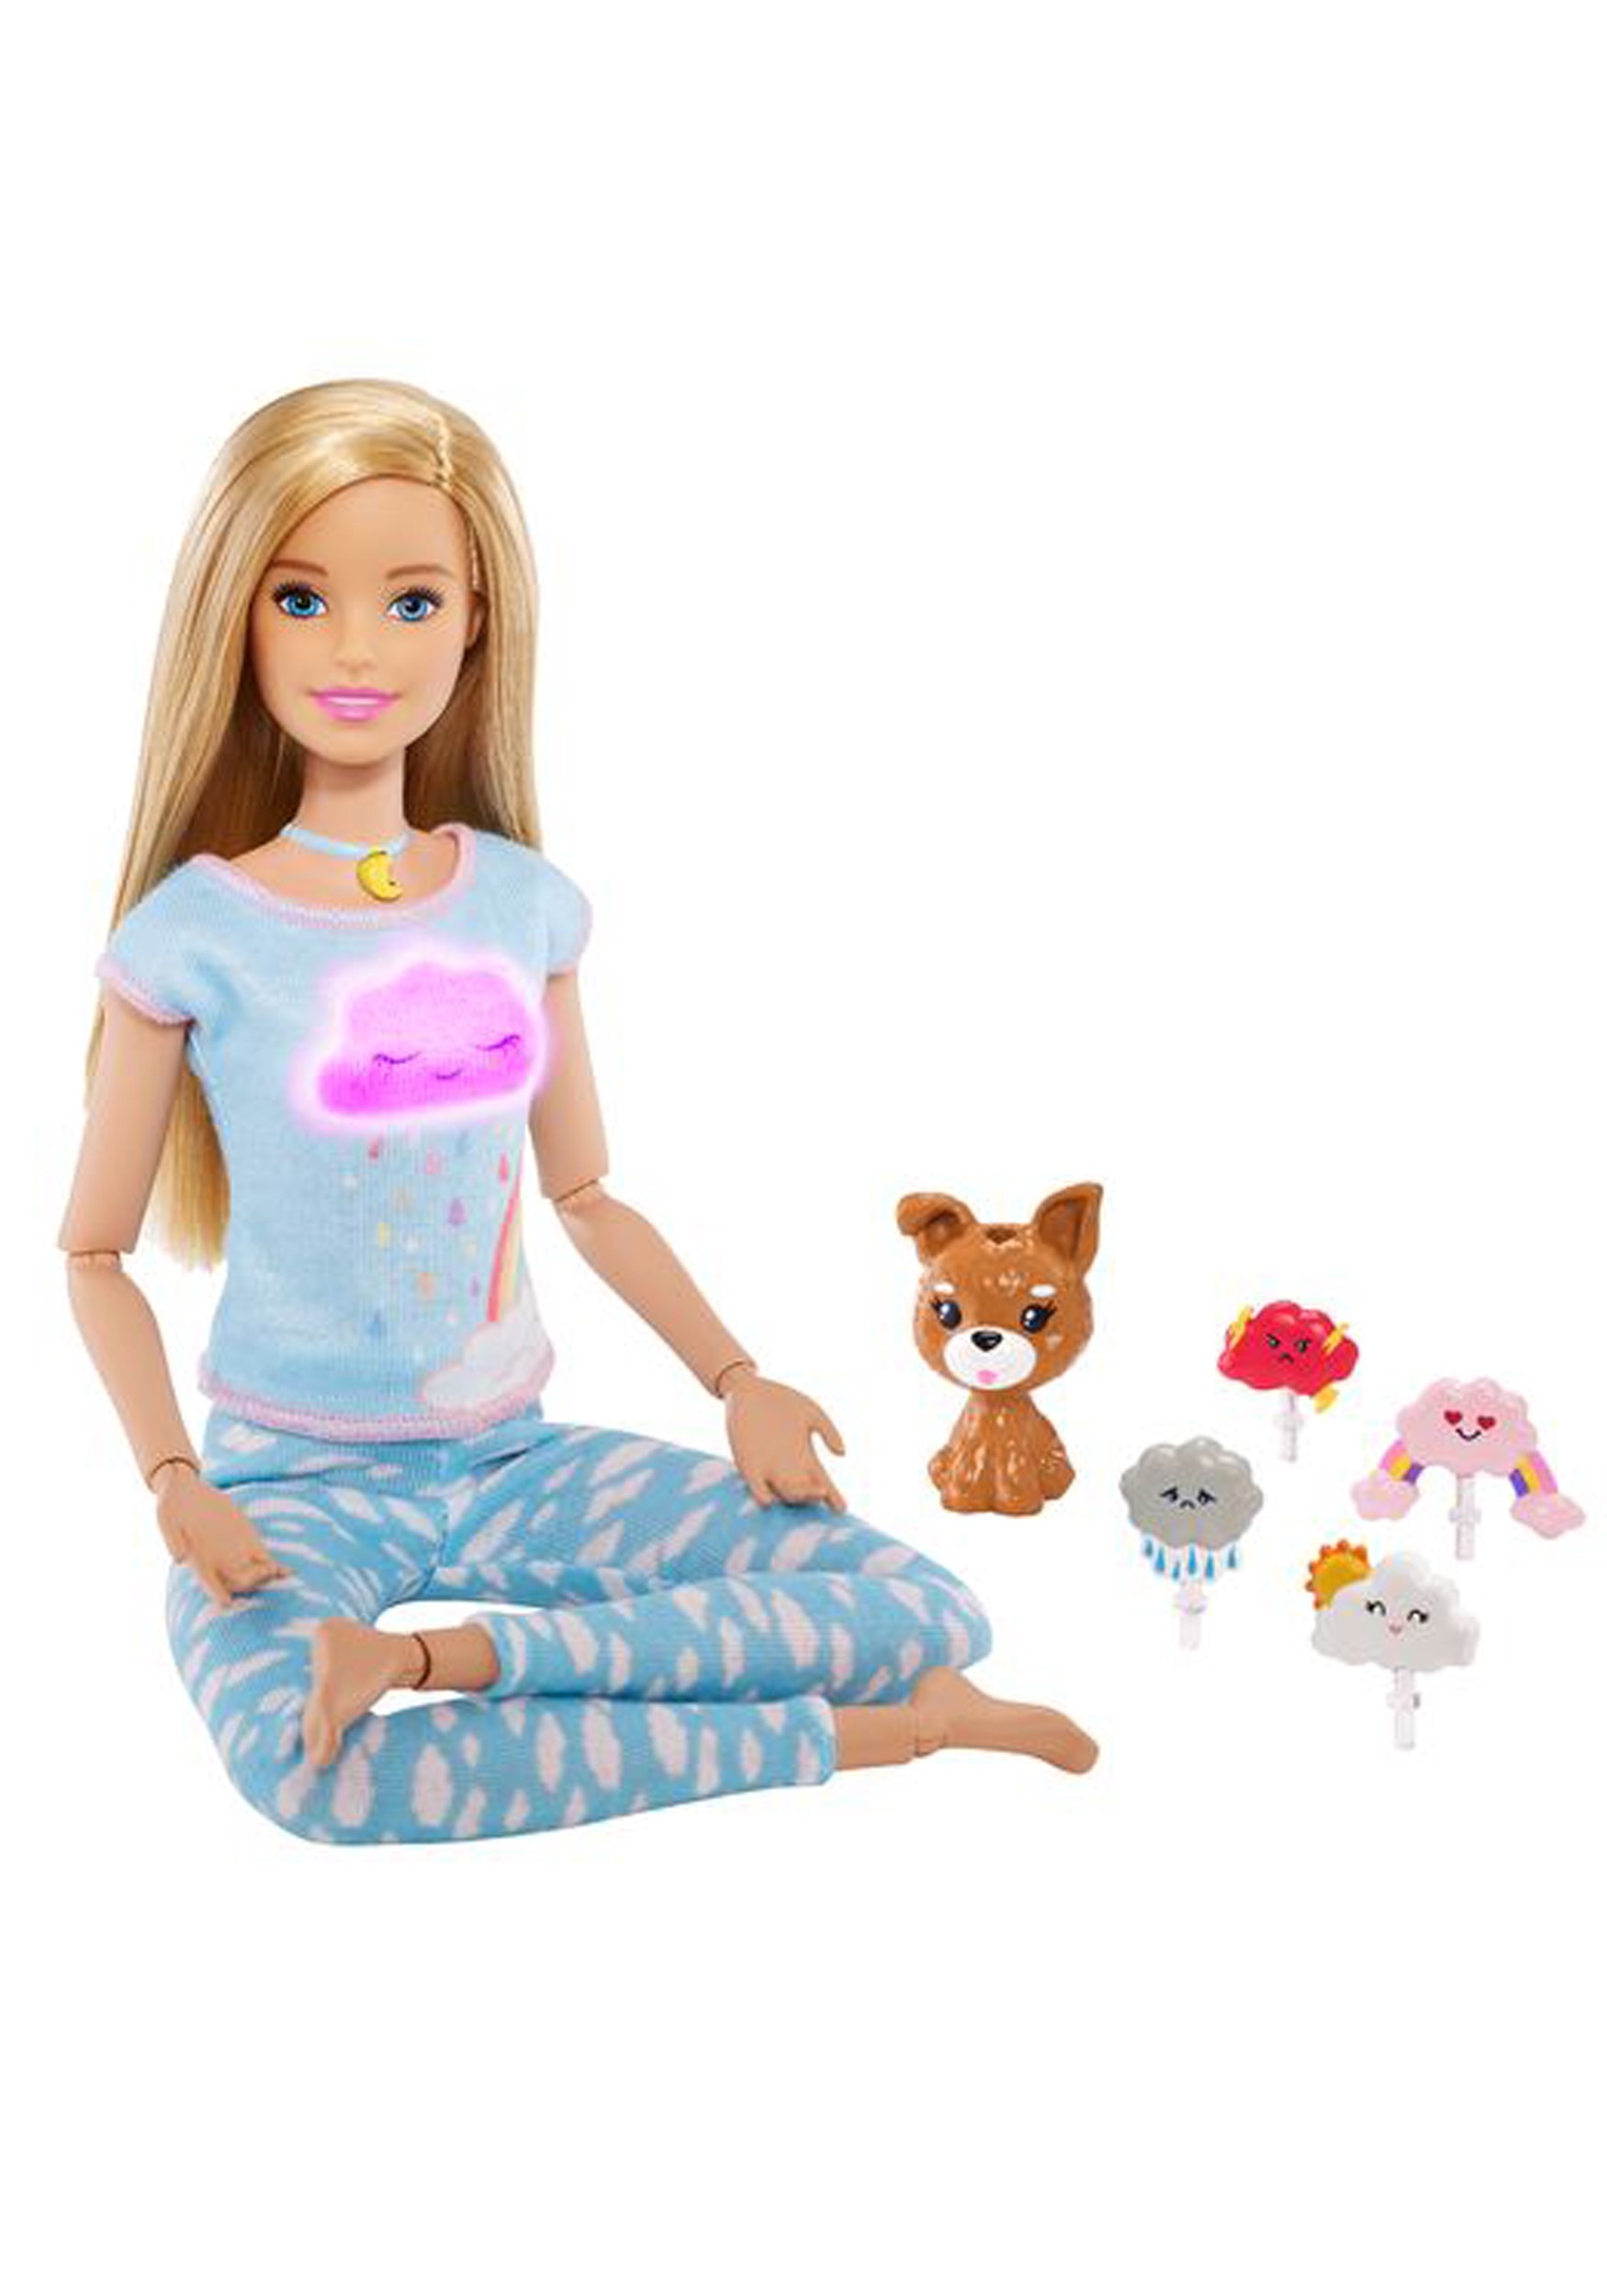 Barbie Breathe w/ Me Blonde Meditation Doll